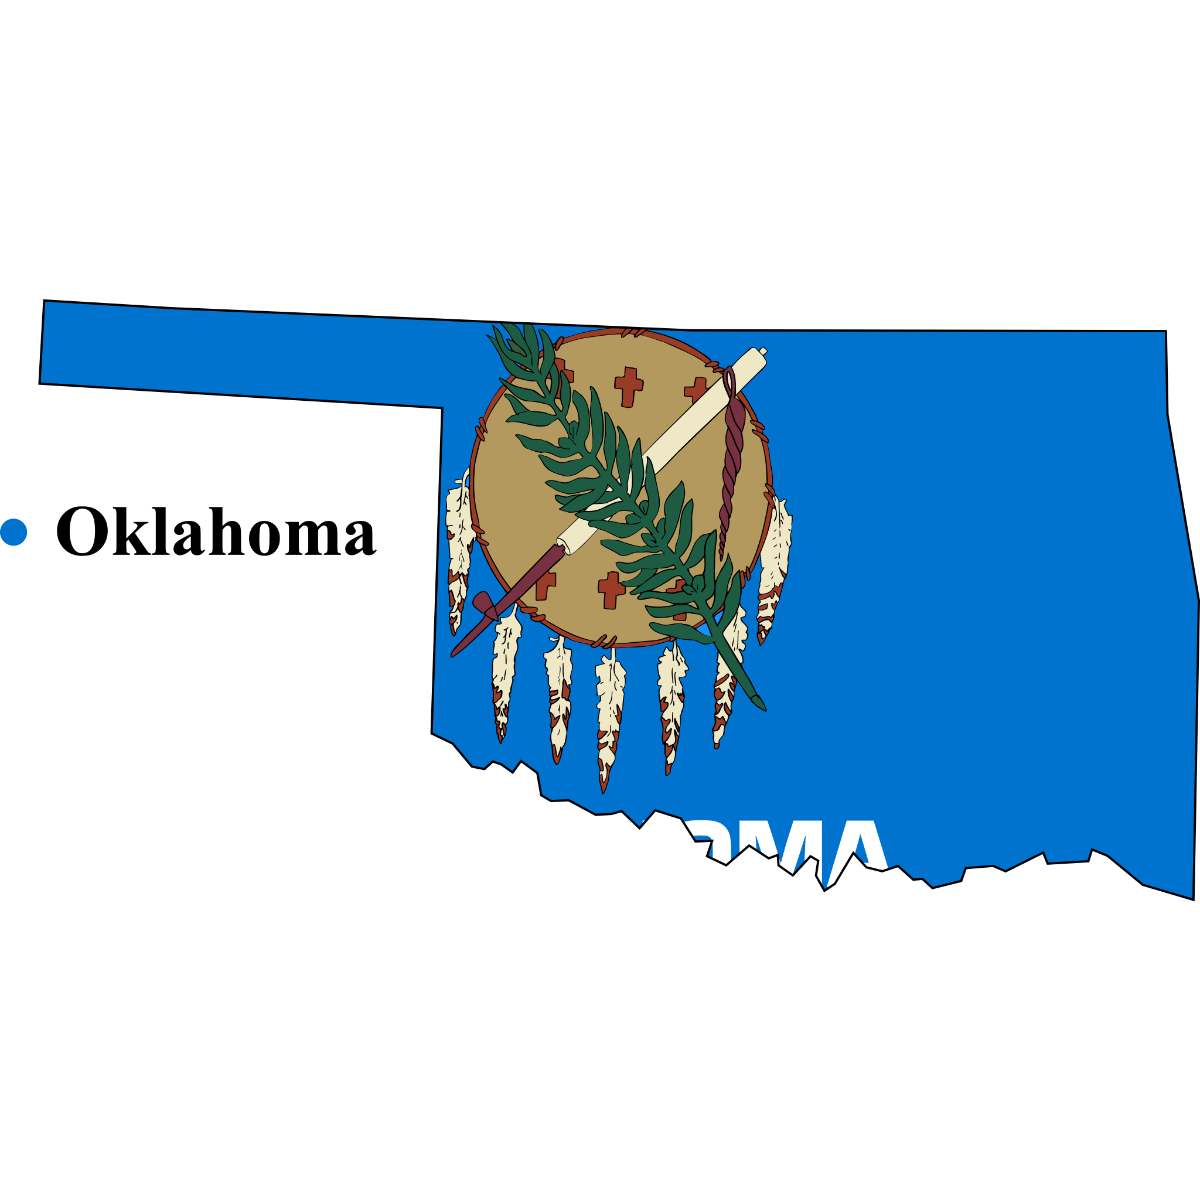 Oklahoma State map cutout with Oklahoma flag superimposed